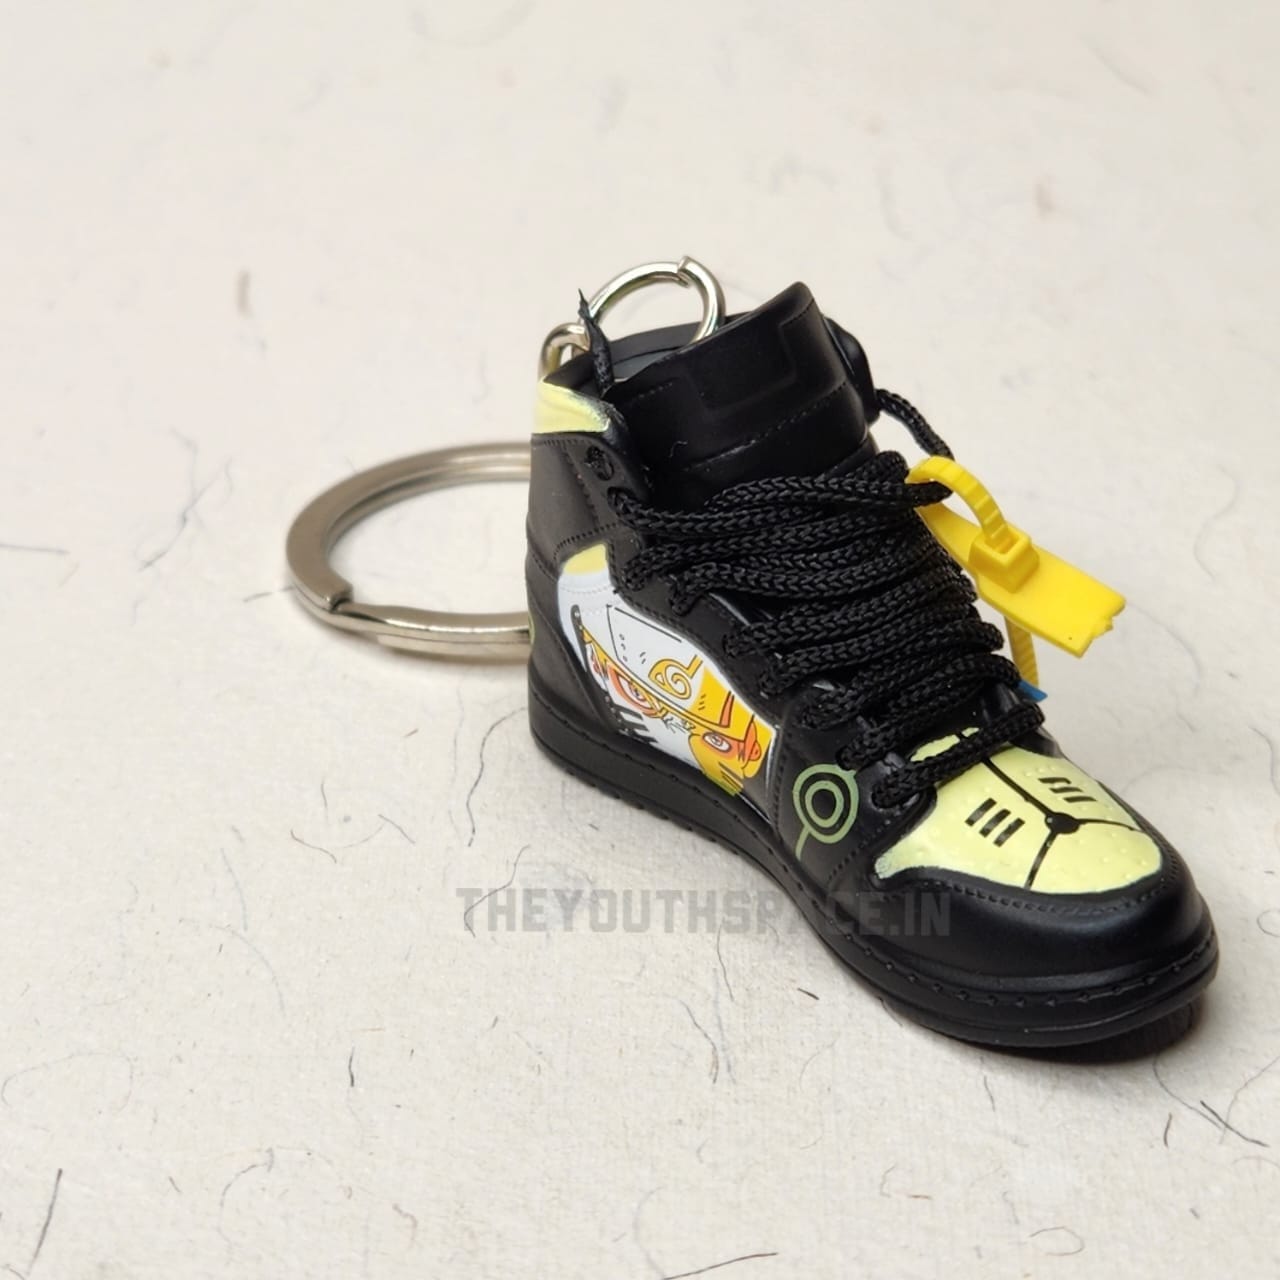 Naruto Sneaker Keychain